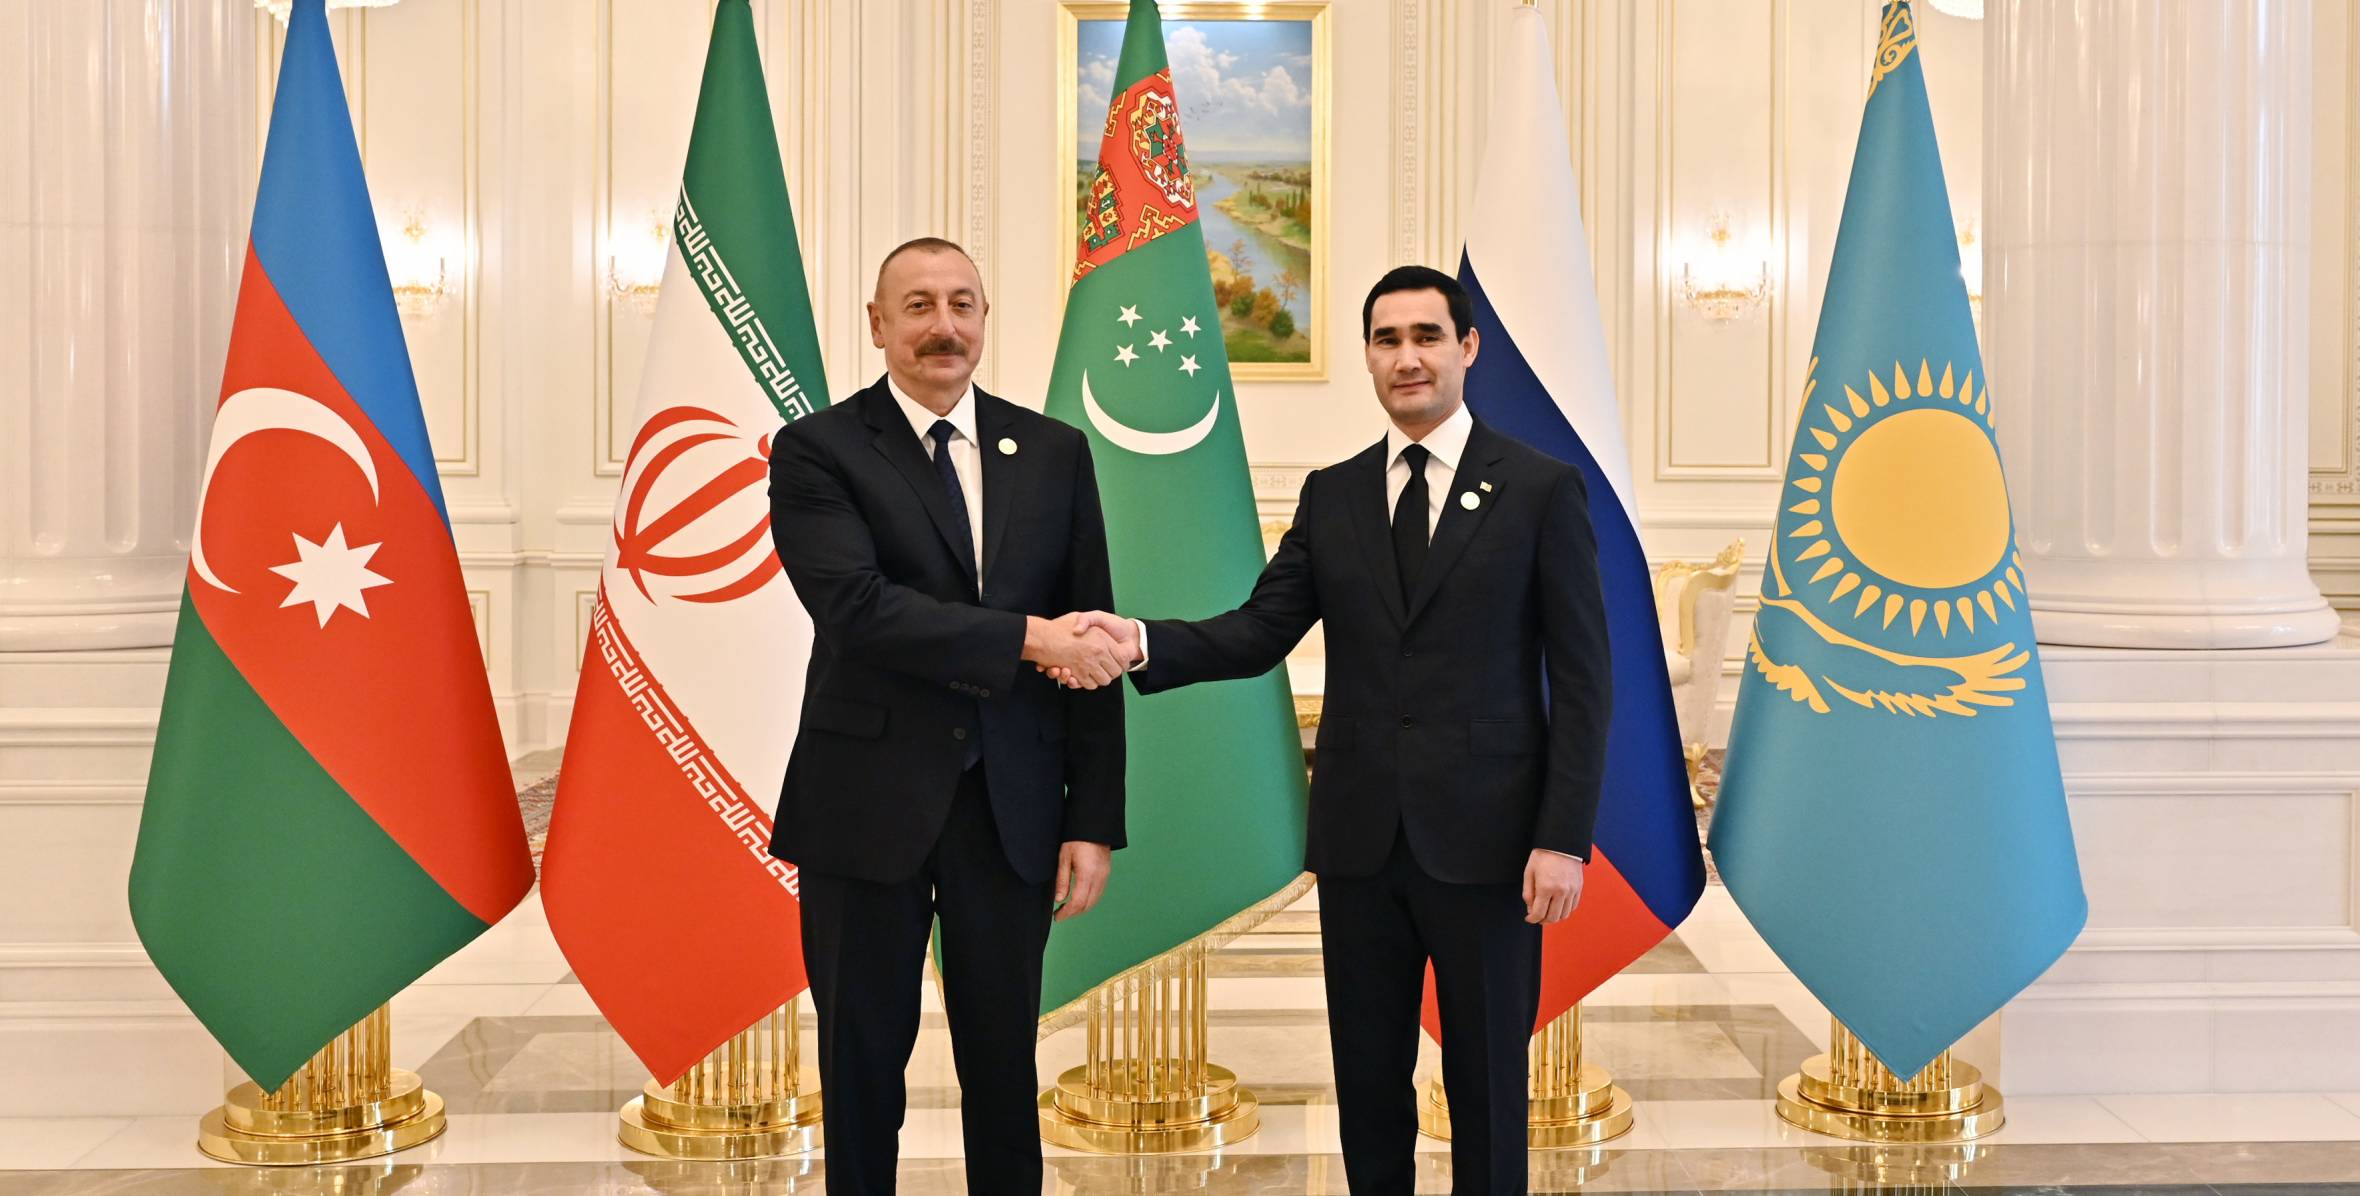 Ilham Aliyev has met with President of Turkmenistan Serdar Berdimuhamedov in Ashgabat